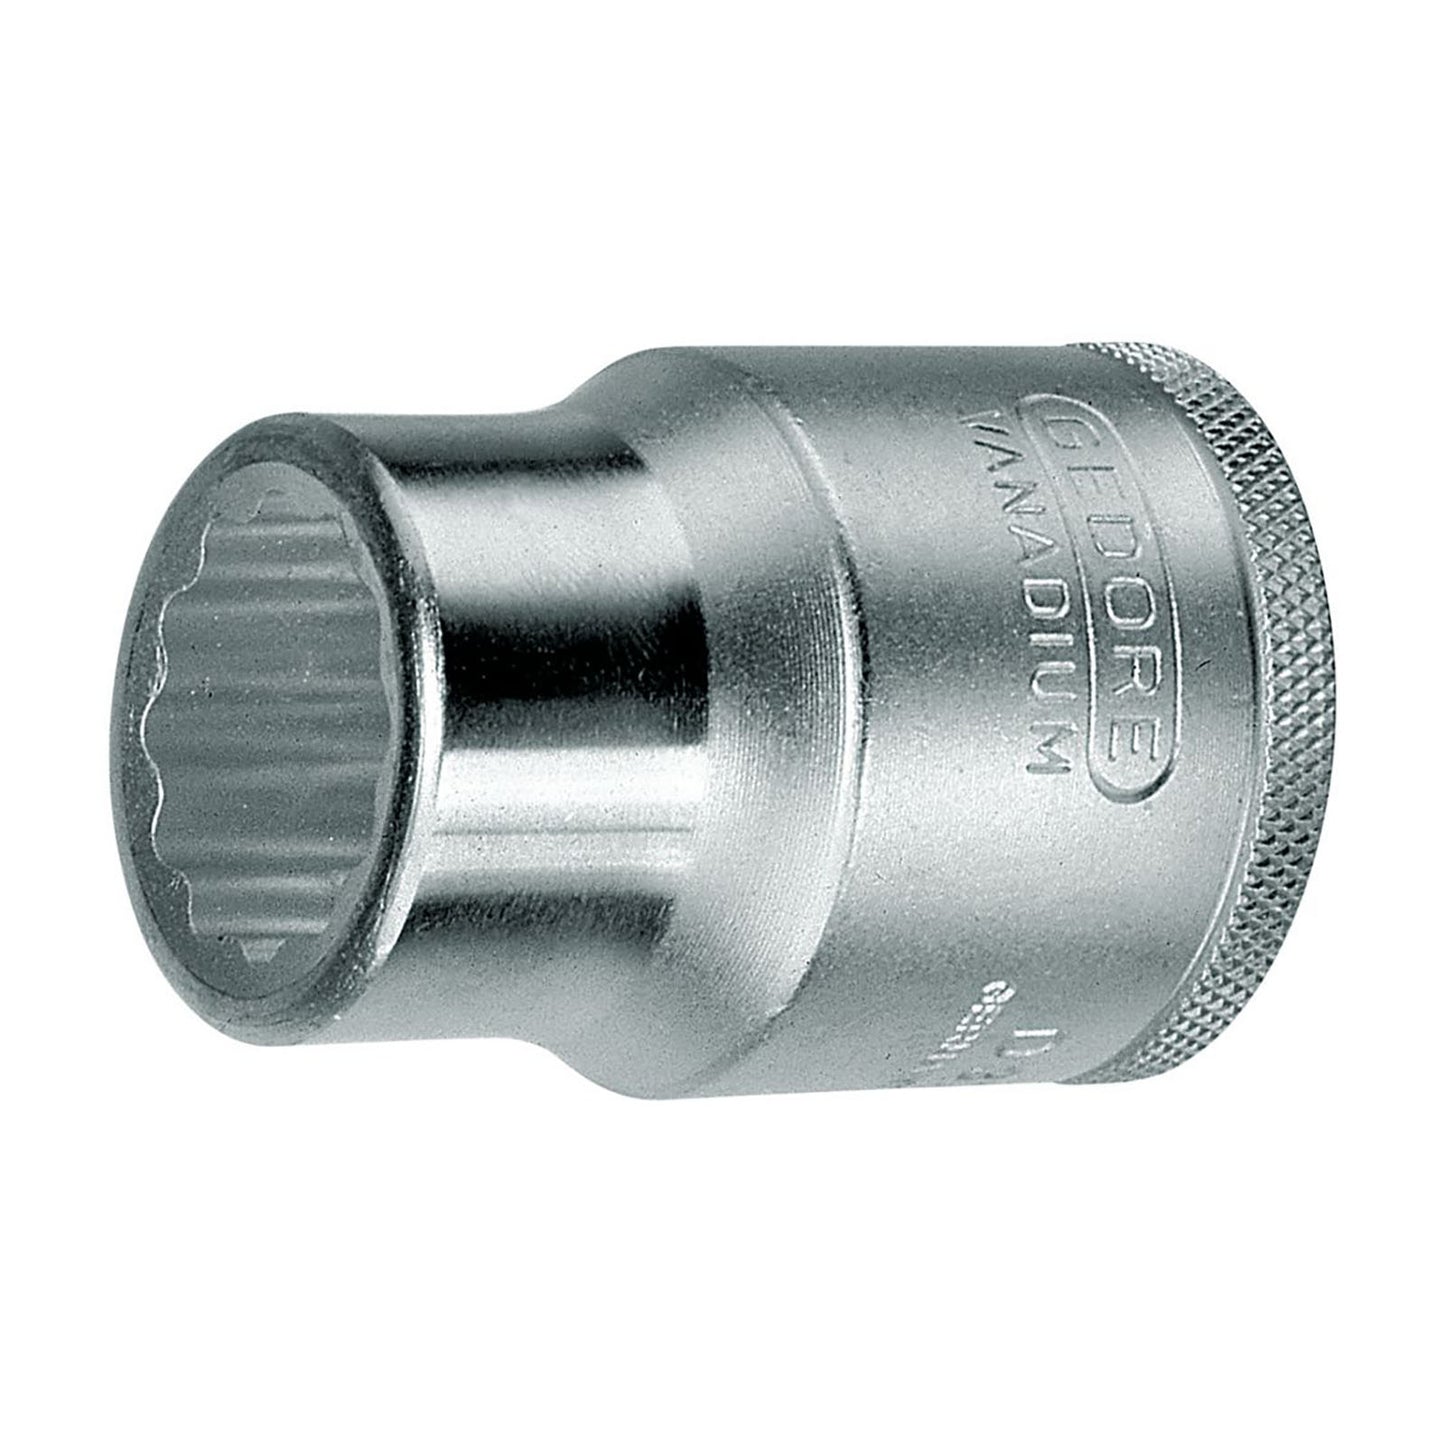 GEDORE D 32 41 - Vaso Unit Drive 3/4", 41 mm (6273050)